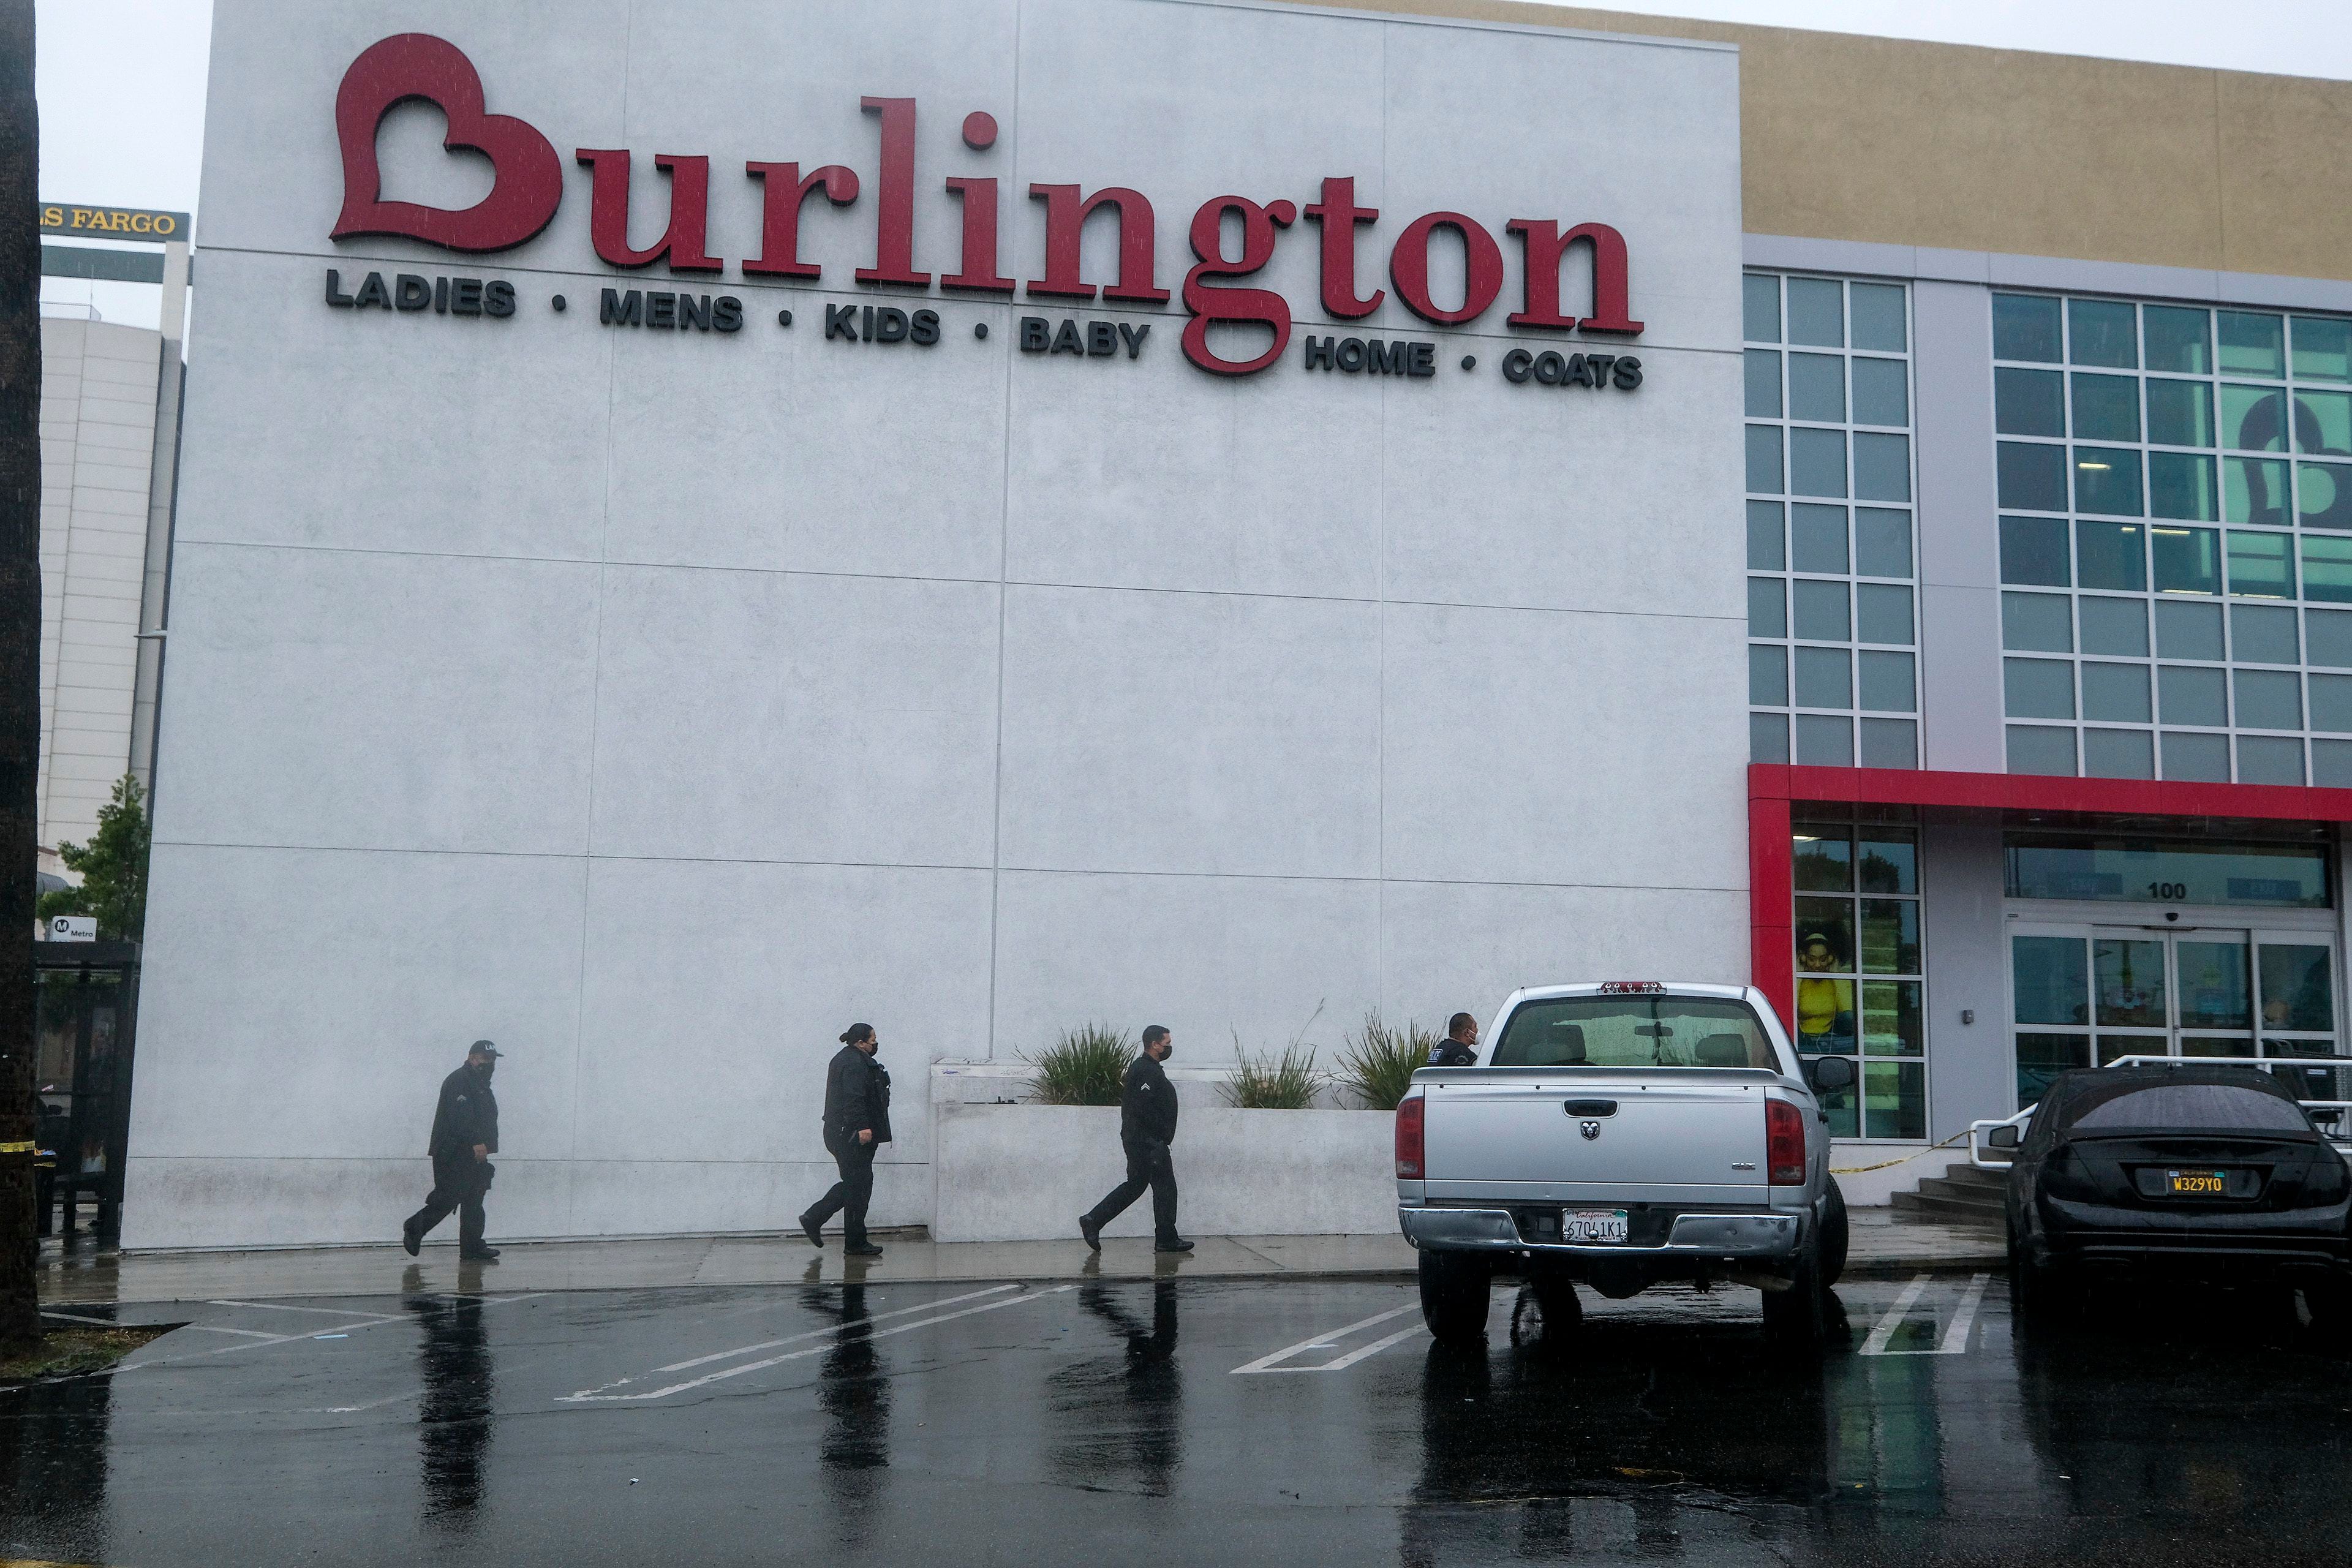 Burlington Rebrands Itself To Show It's More Than Just Coats